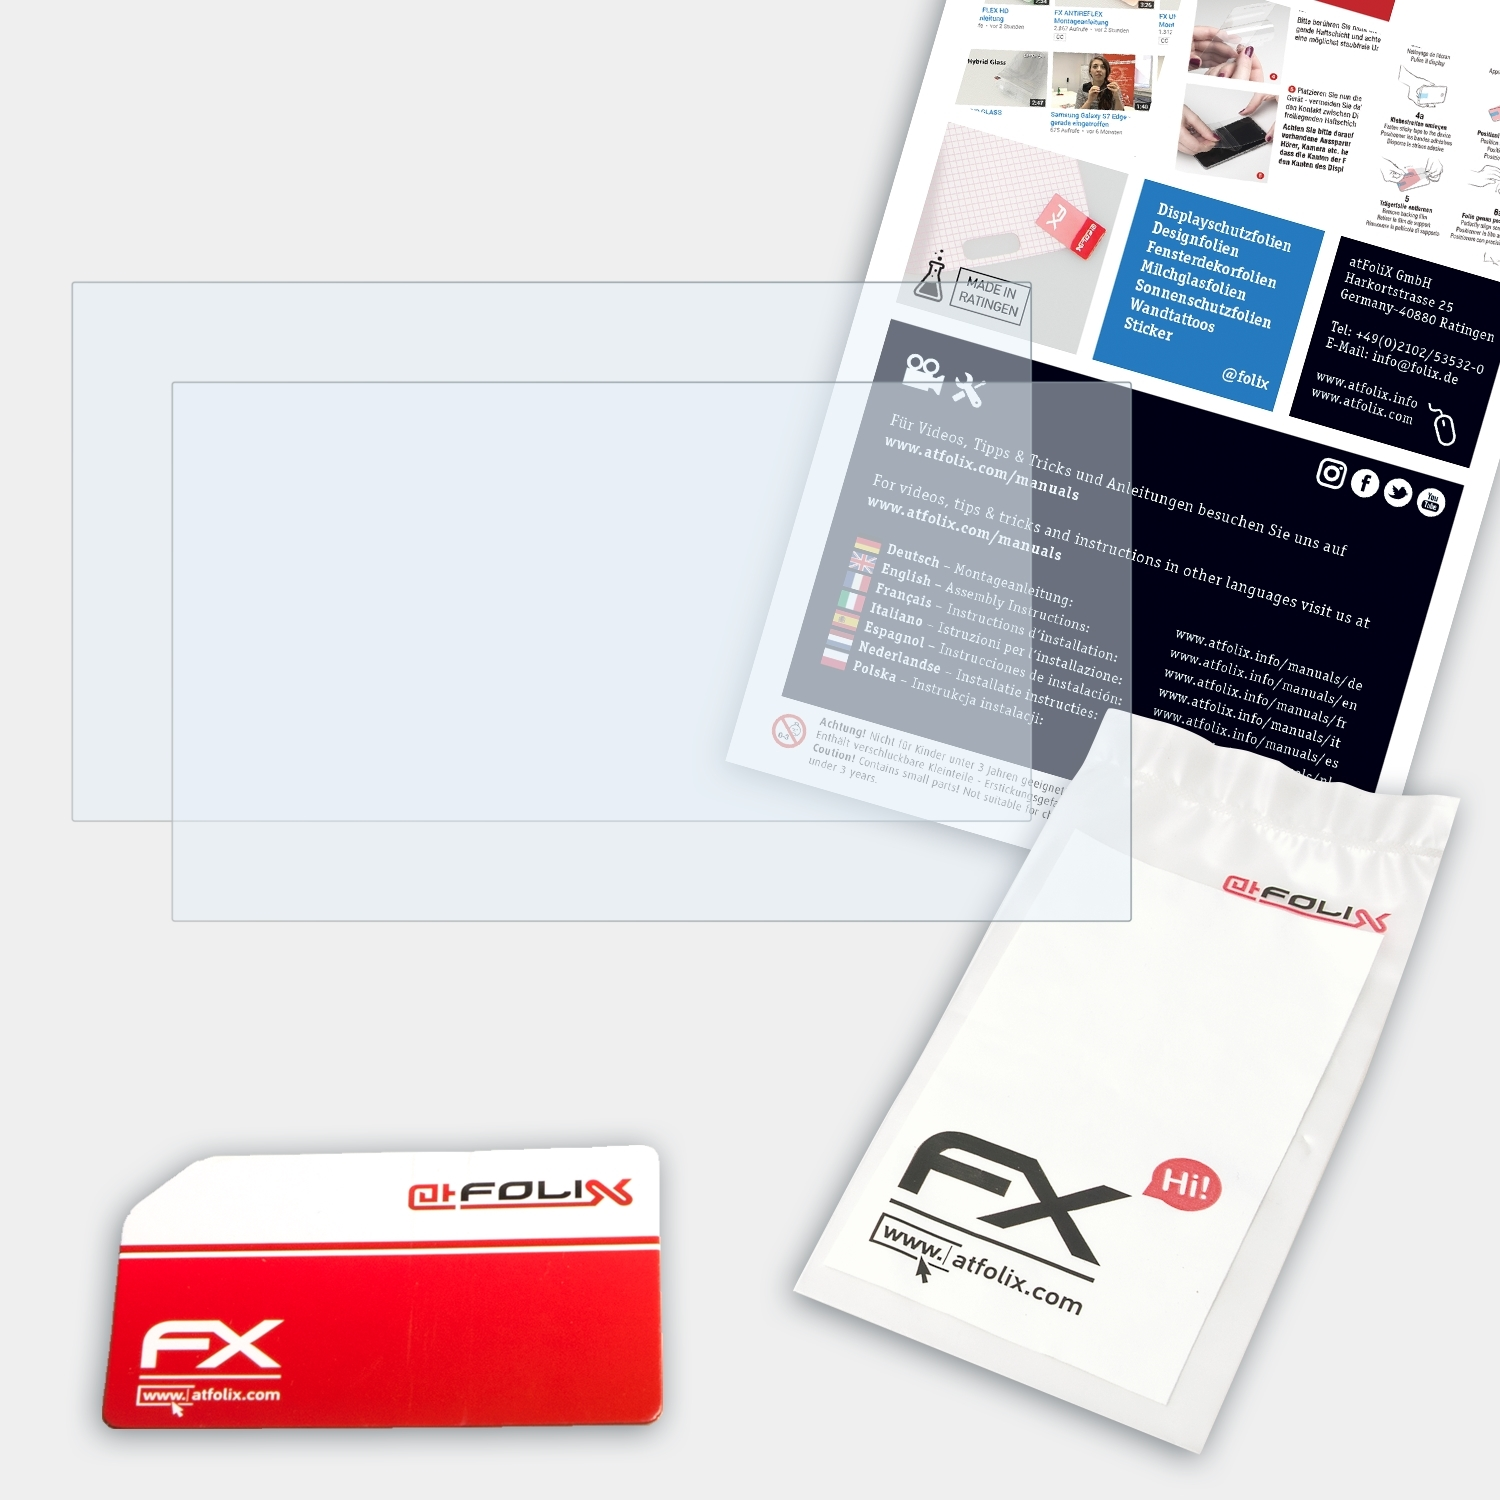 ATFOLIX 2x FX-Clear Displayschutz(für (9343 Dell Ultrabook 13 Version FHD, XPS 2015))